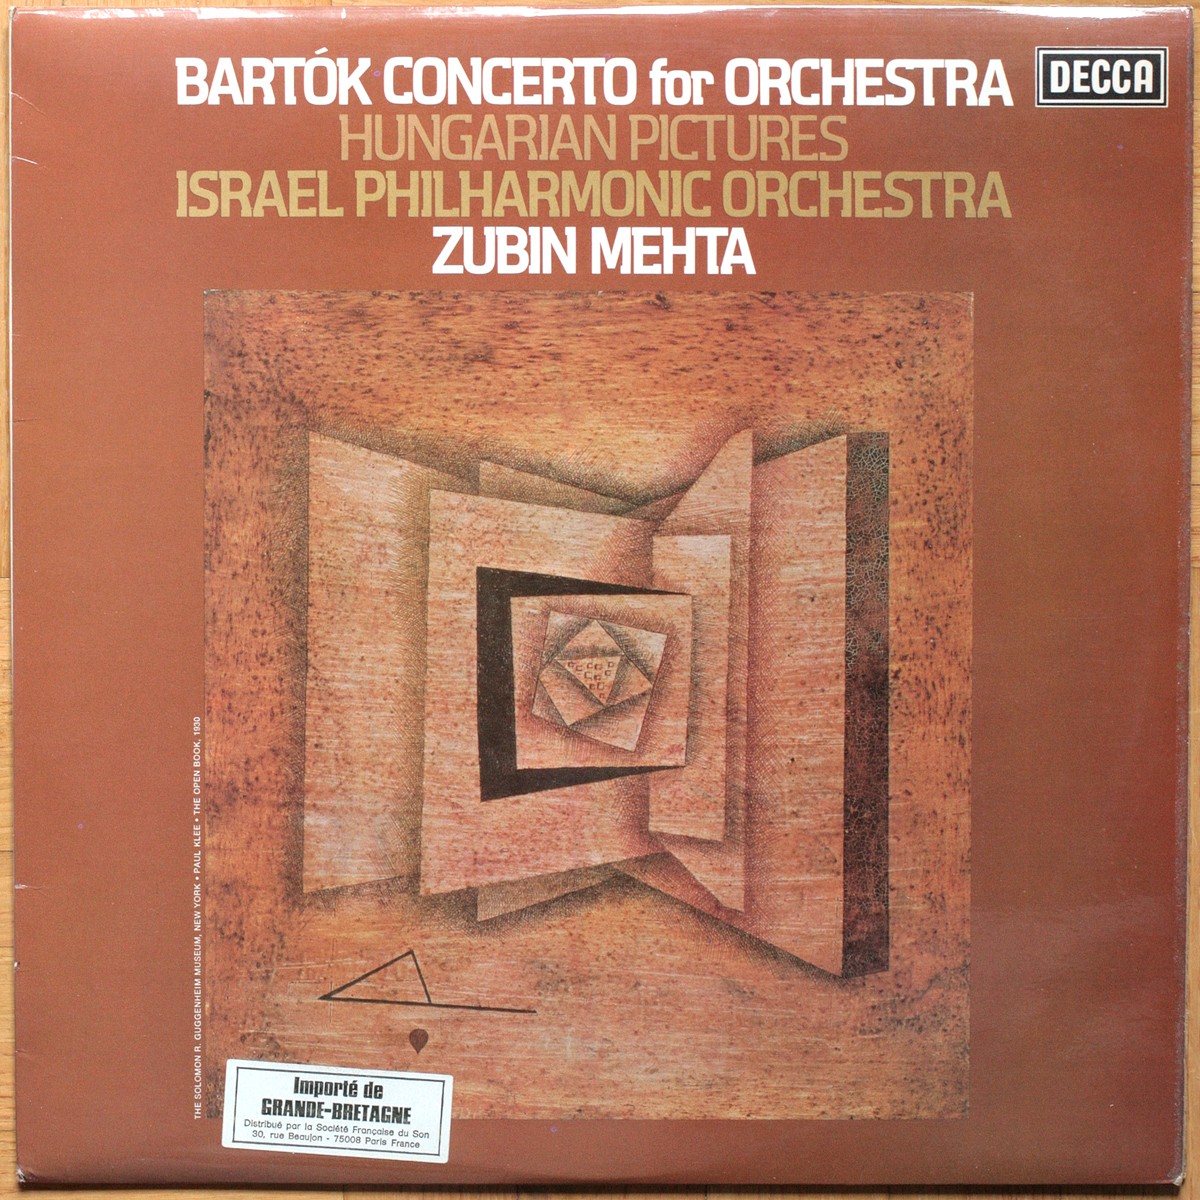 Bartók • Concerto pour orchestre – Concerto for orchestra • Images hongroises – Hungarian Pictures • SXL 6730 • Israel Philharmonic Orchestra • Zubin Mehta